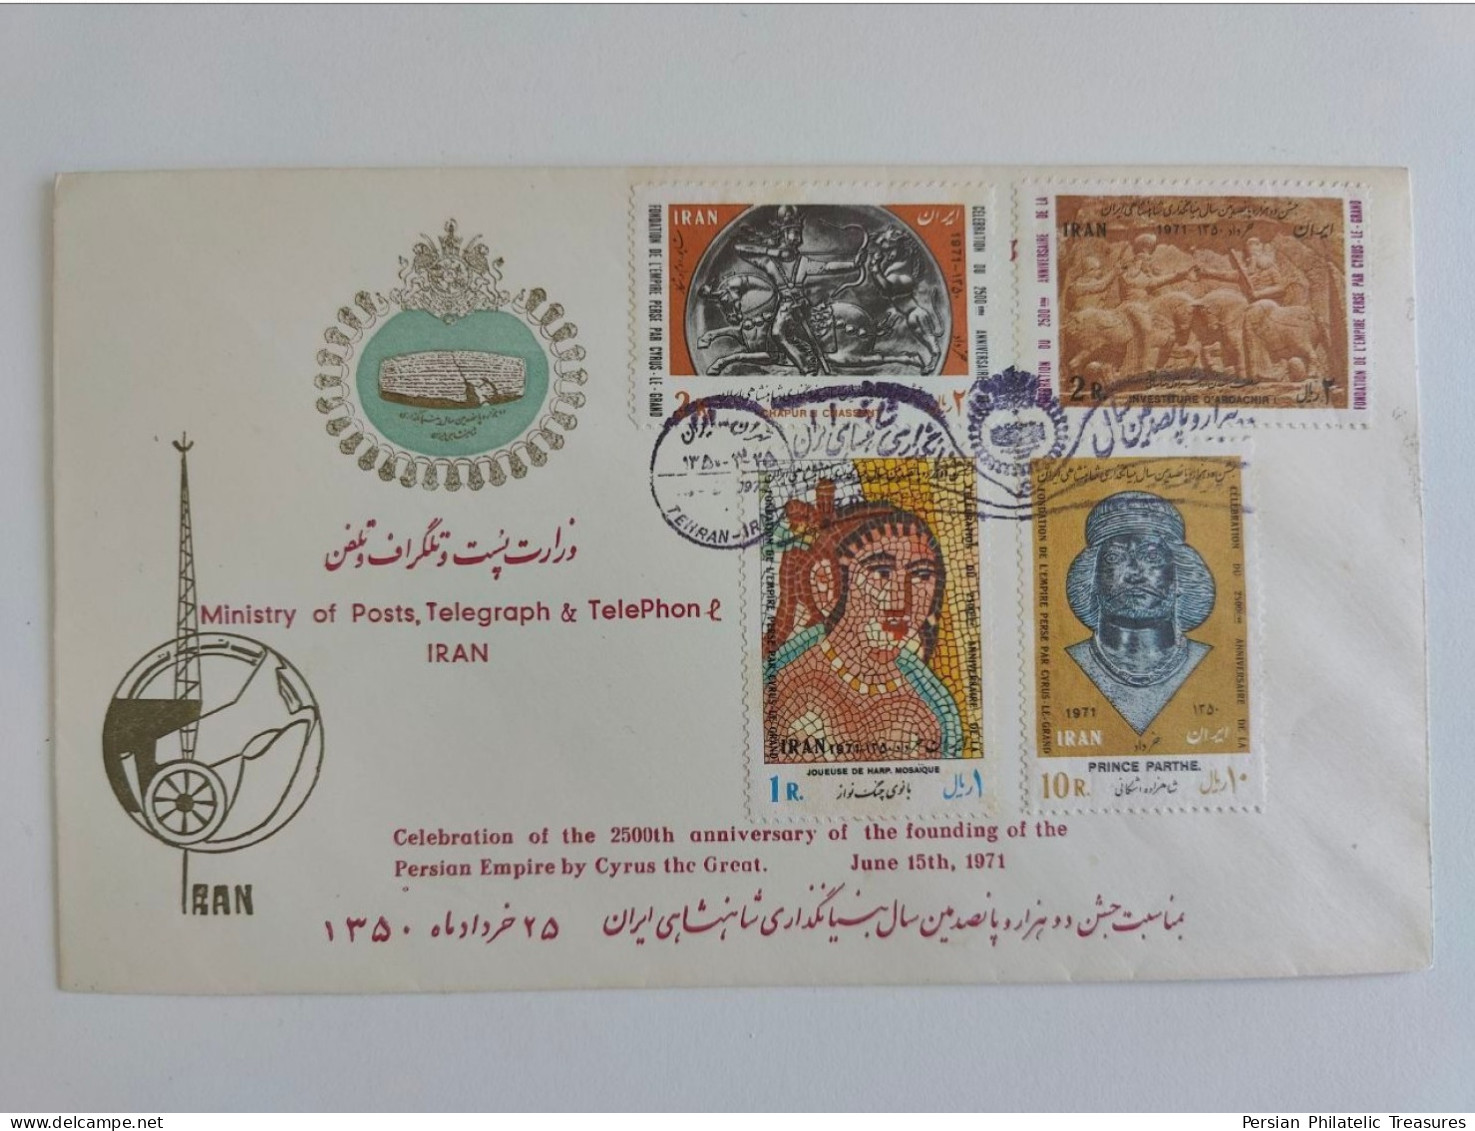 Complete series, 2500, 25th anniversary, Persian empire, 1971, Cyrus the Great, Iran, FDC